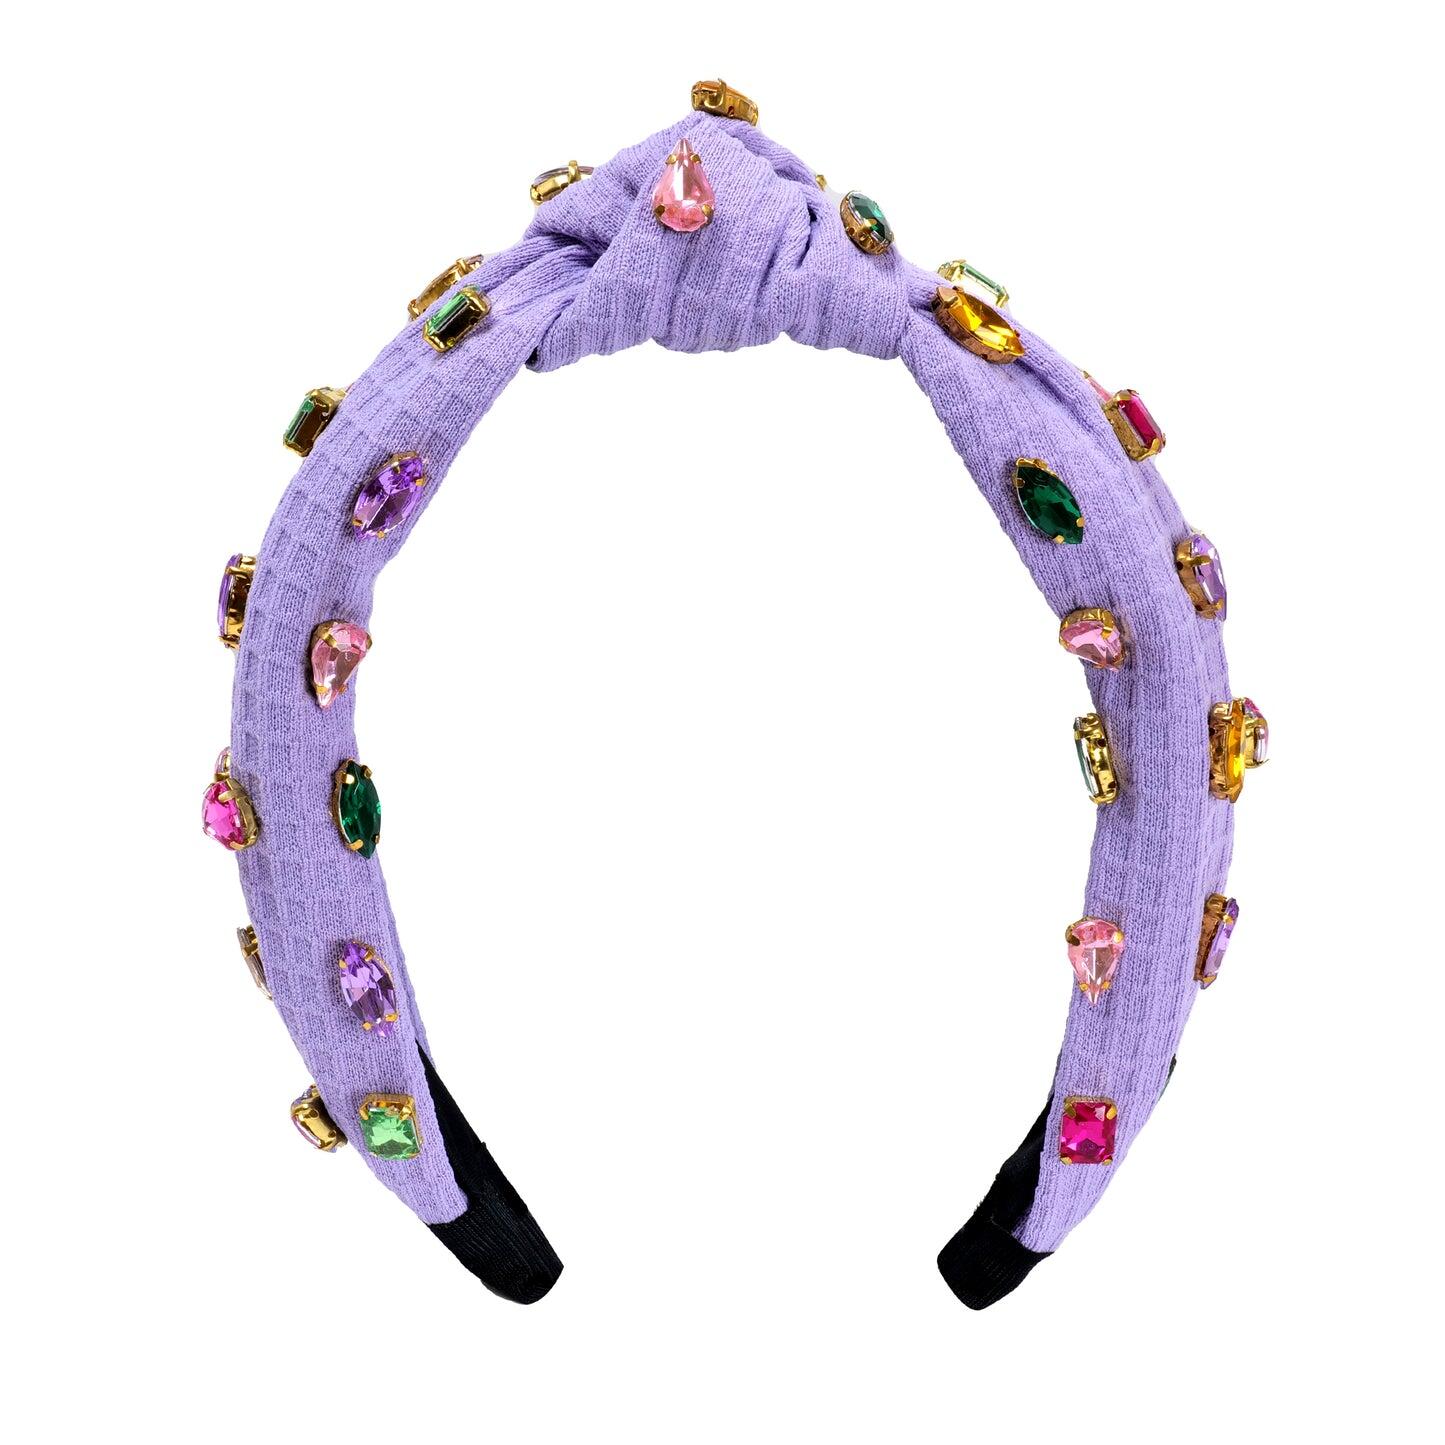 Fashionable Colorful Rhinestone Knotted Headband Purple